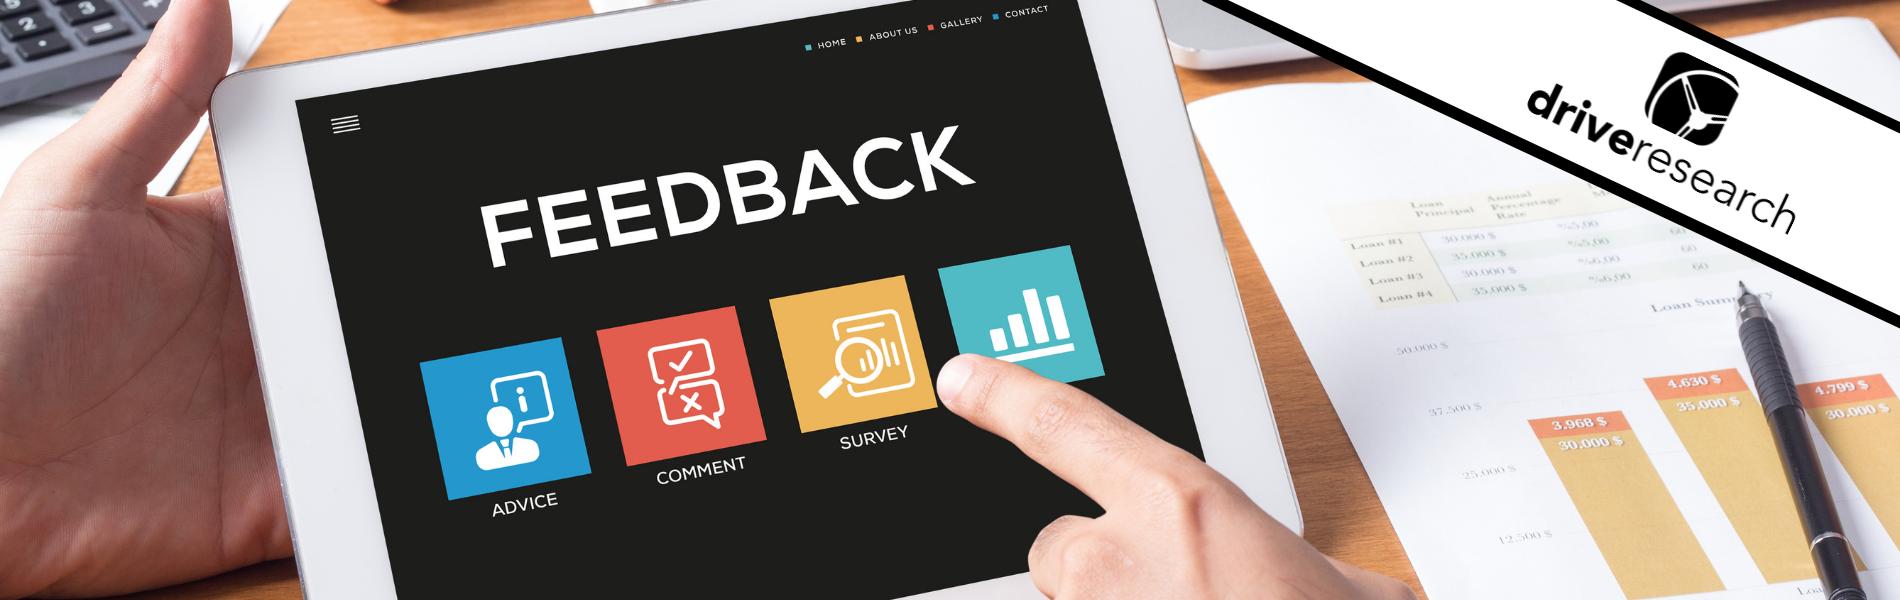 customer feedback survey on a tablet